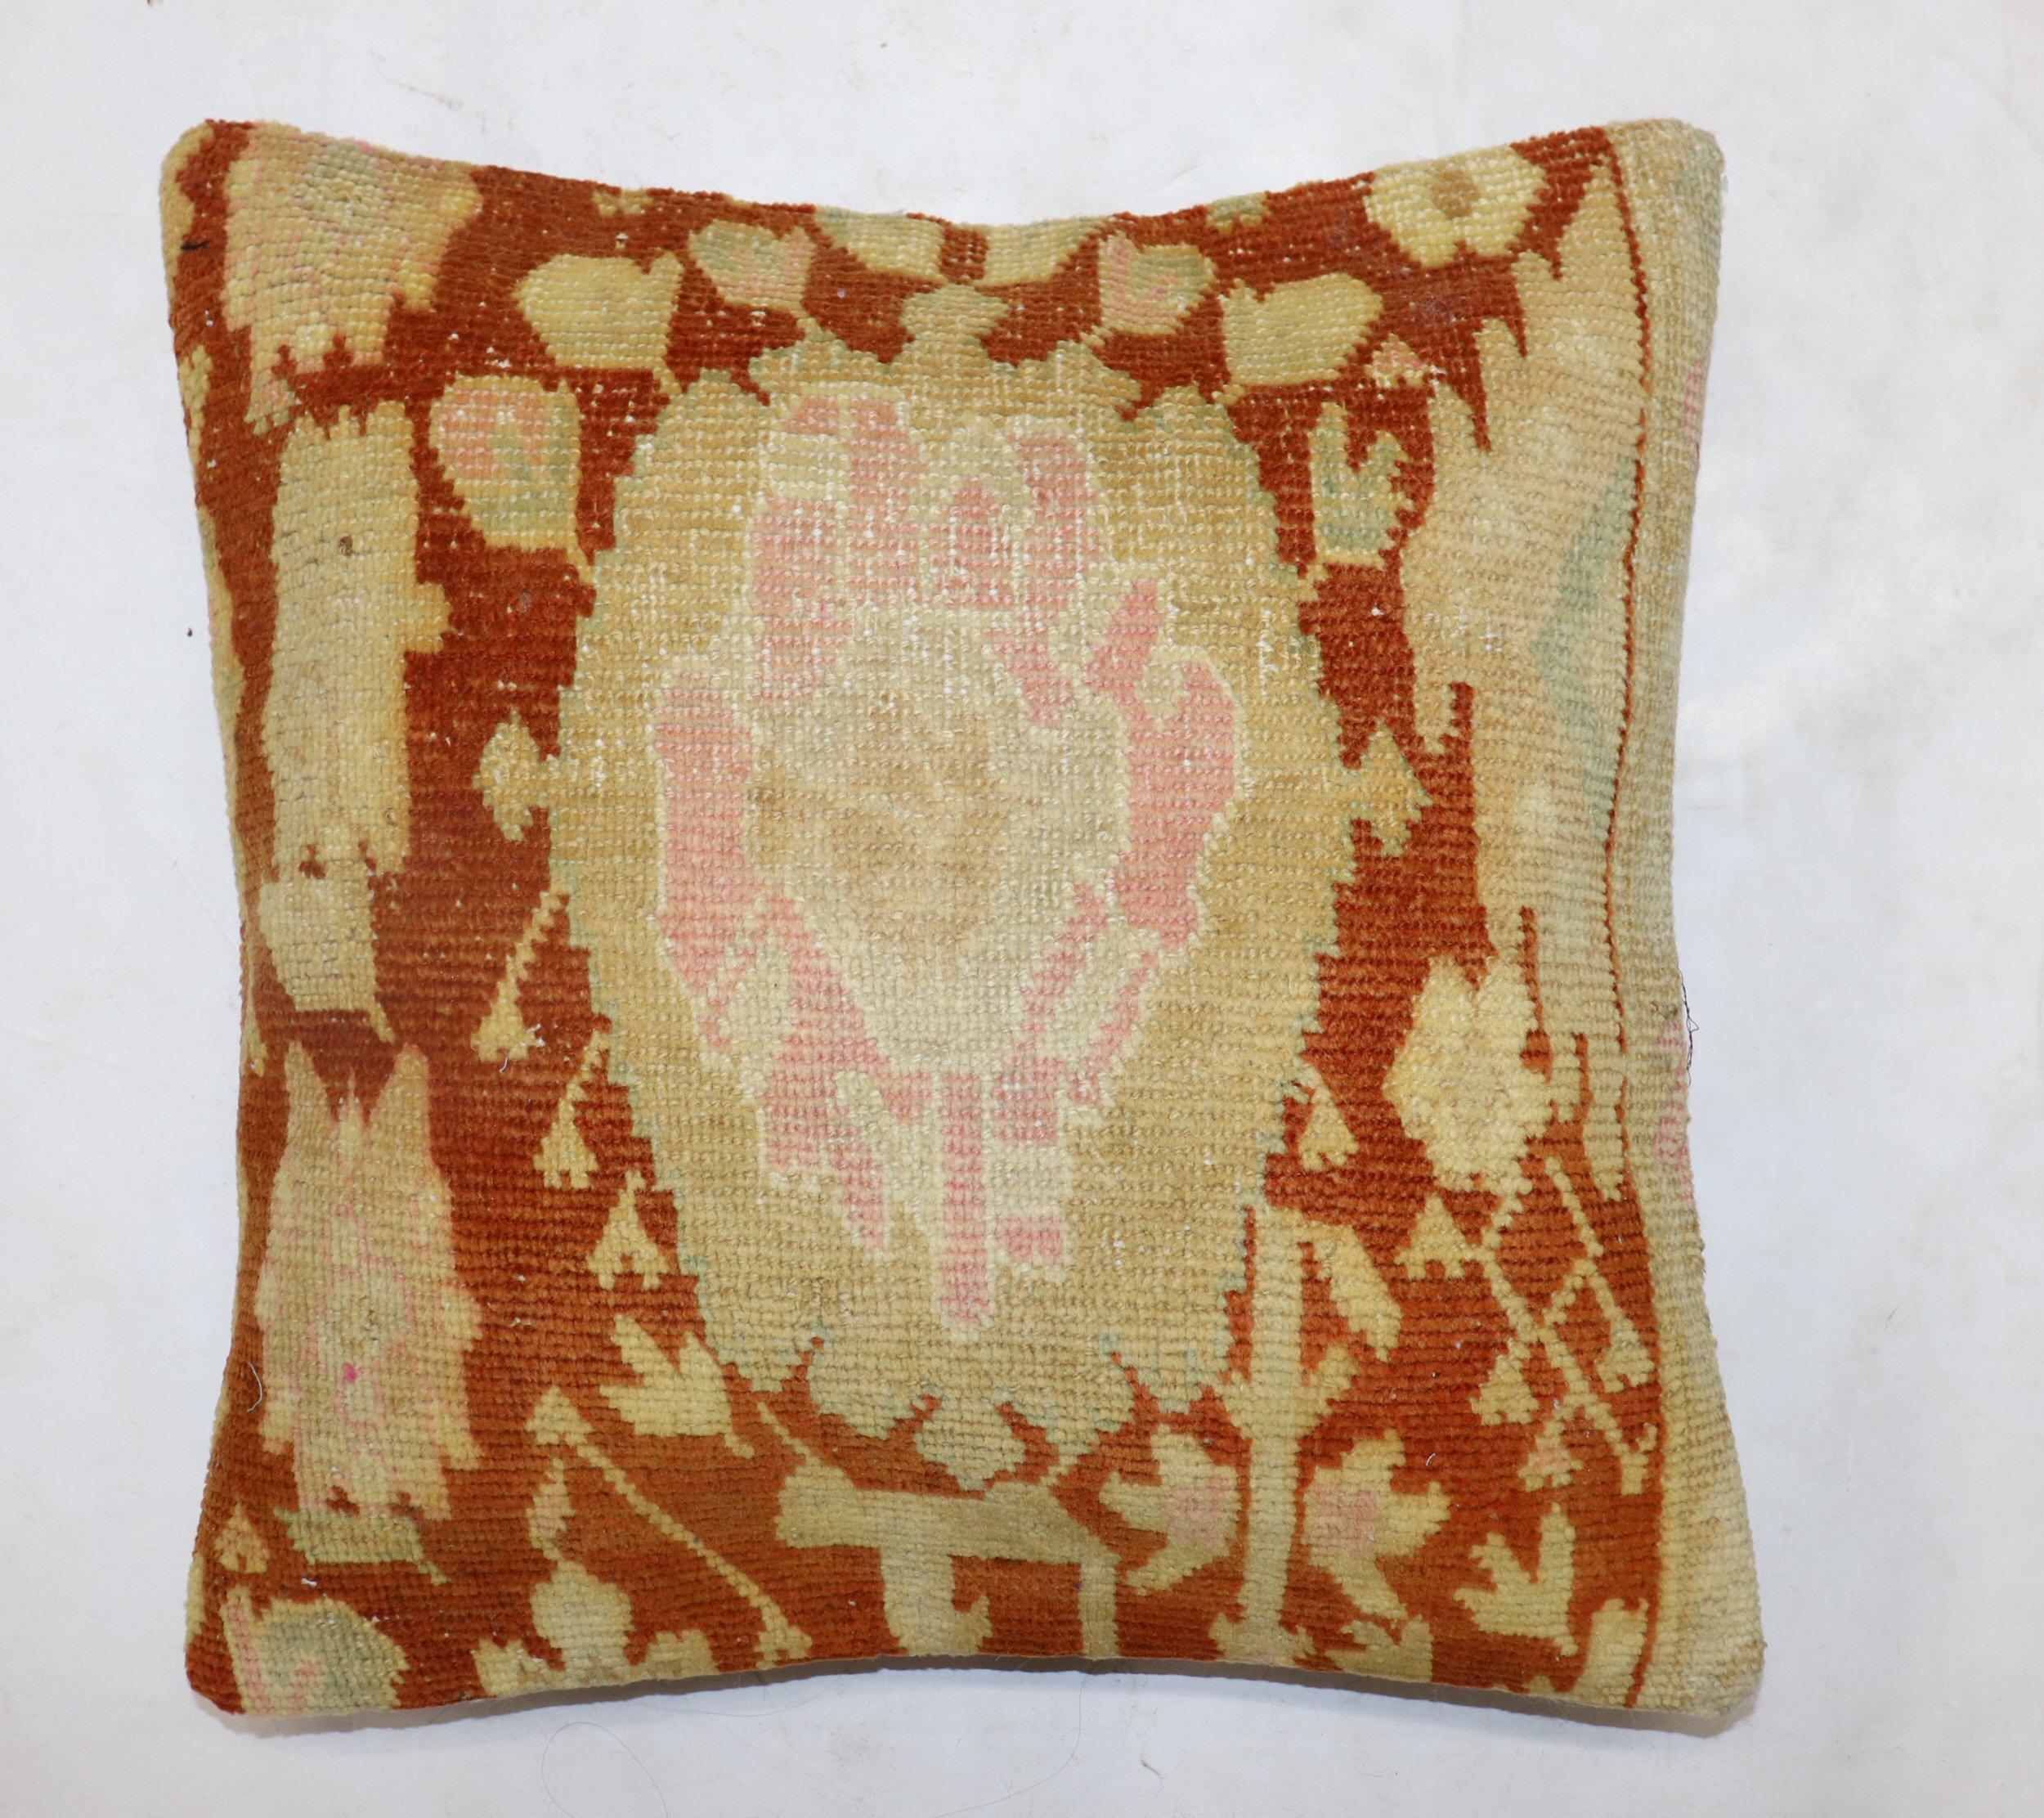 Pillow made from an antique Karabagh rug

Measures: 19'' x 19''.